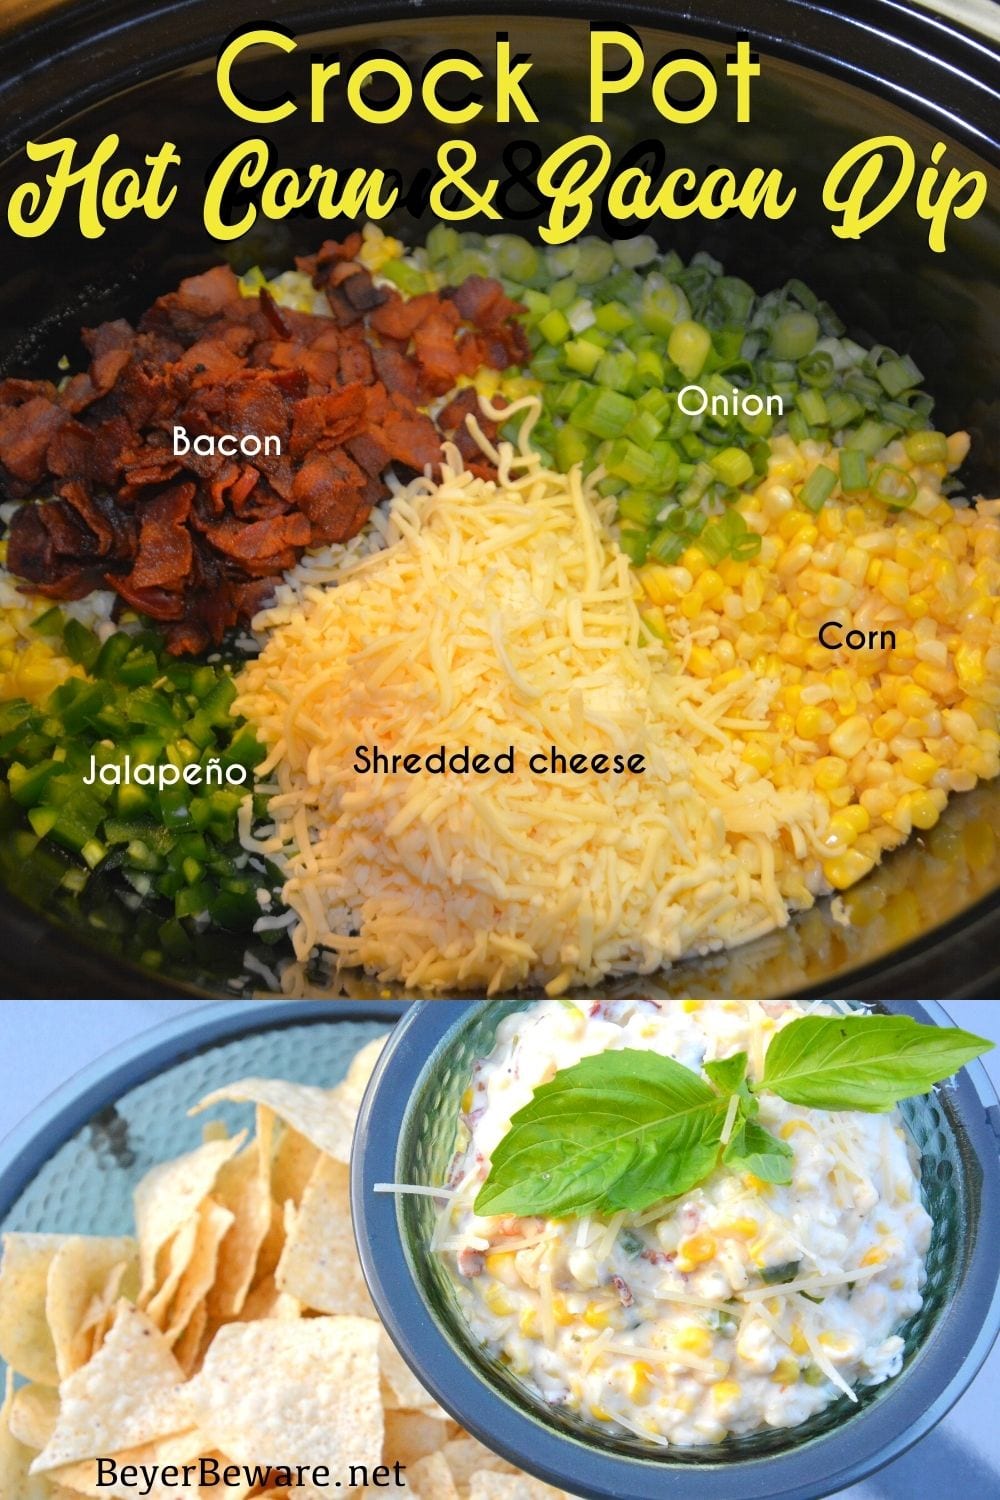 3-Ingredient Crock Pot Corn Dip